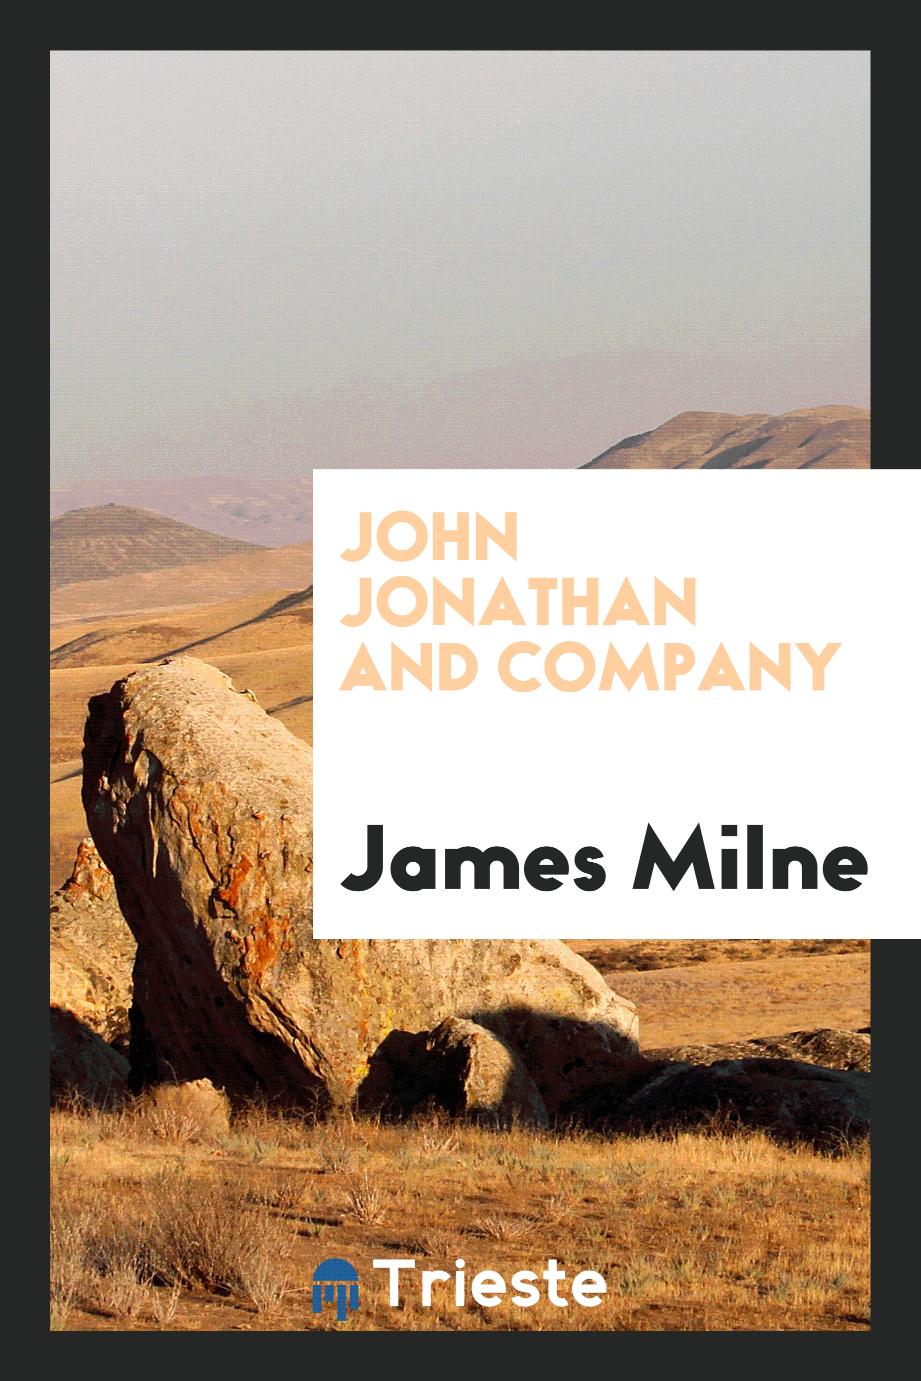 John Jonathan and company